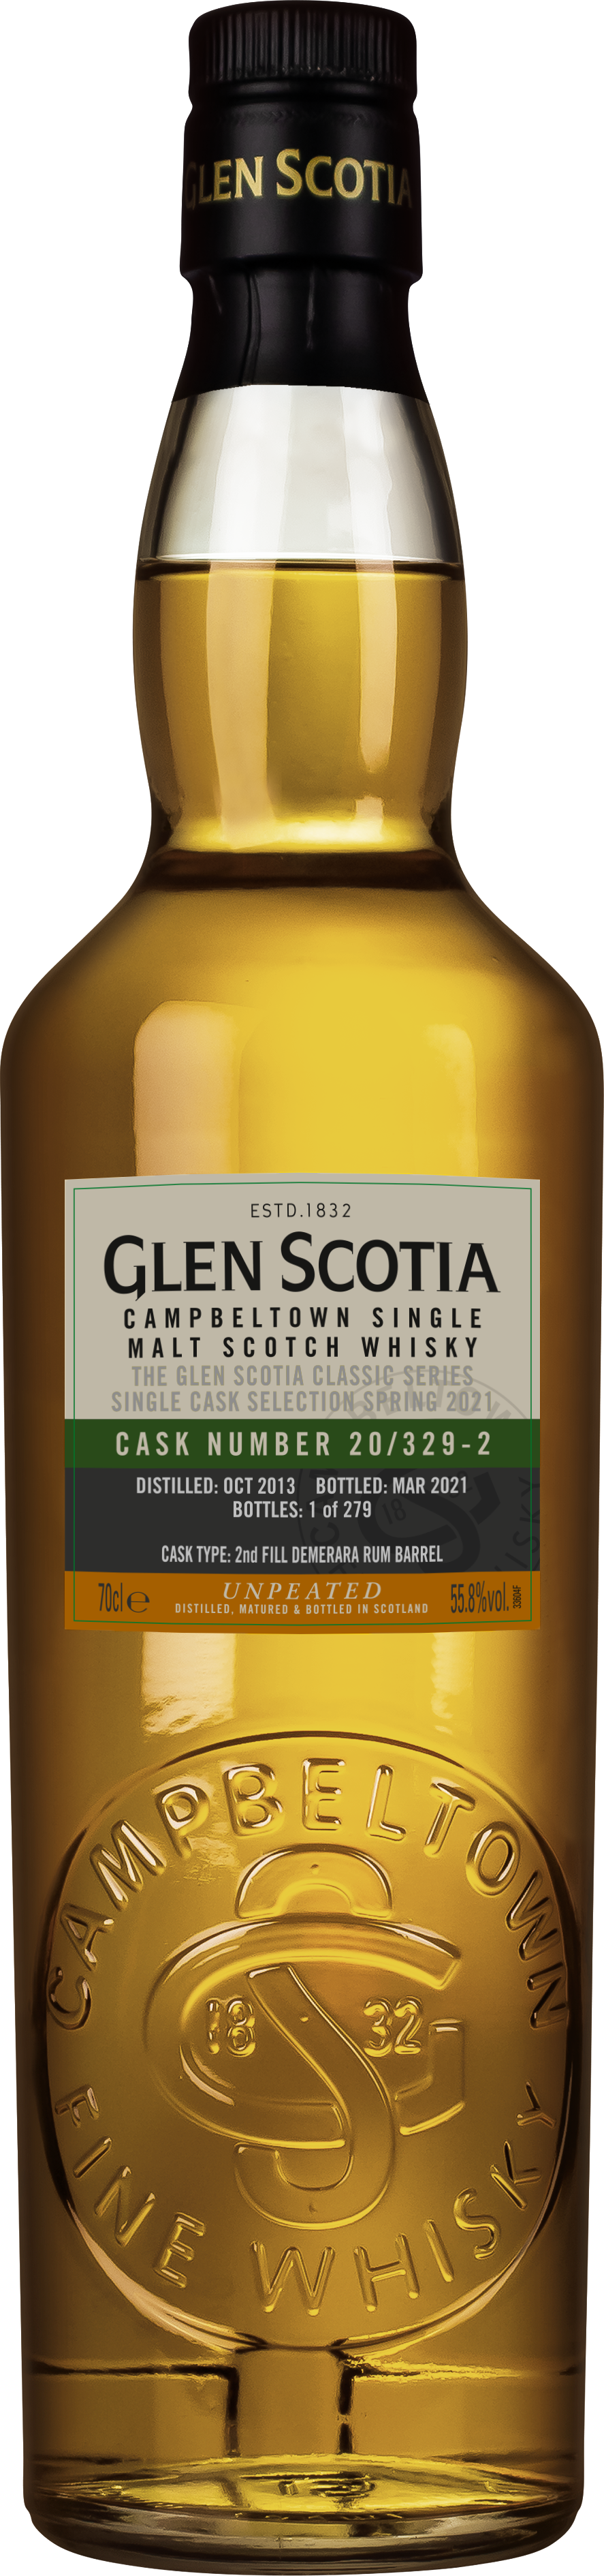 Glen Scotia Vintage 2013 2nd Fill Demerara Rum Finish #5